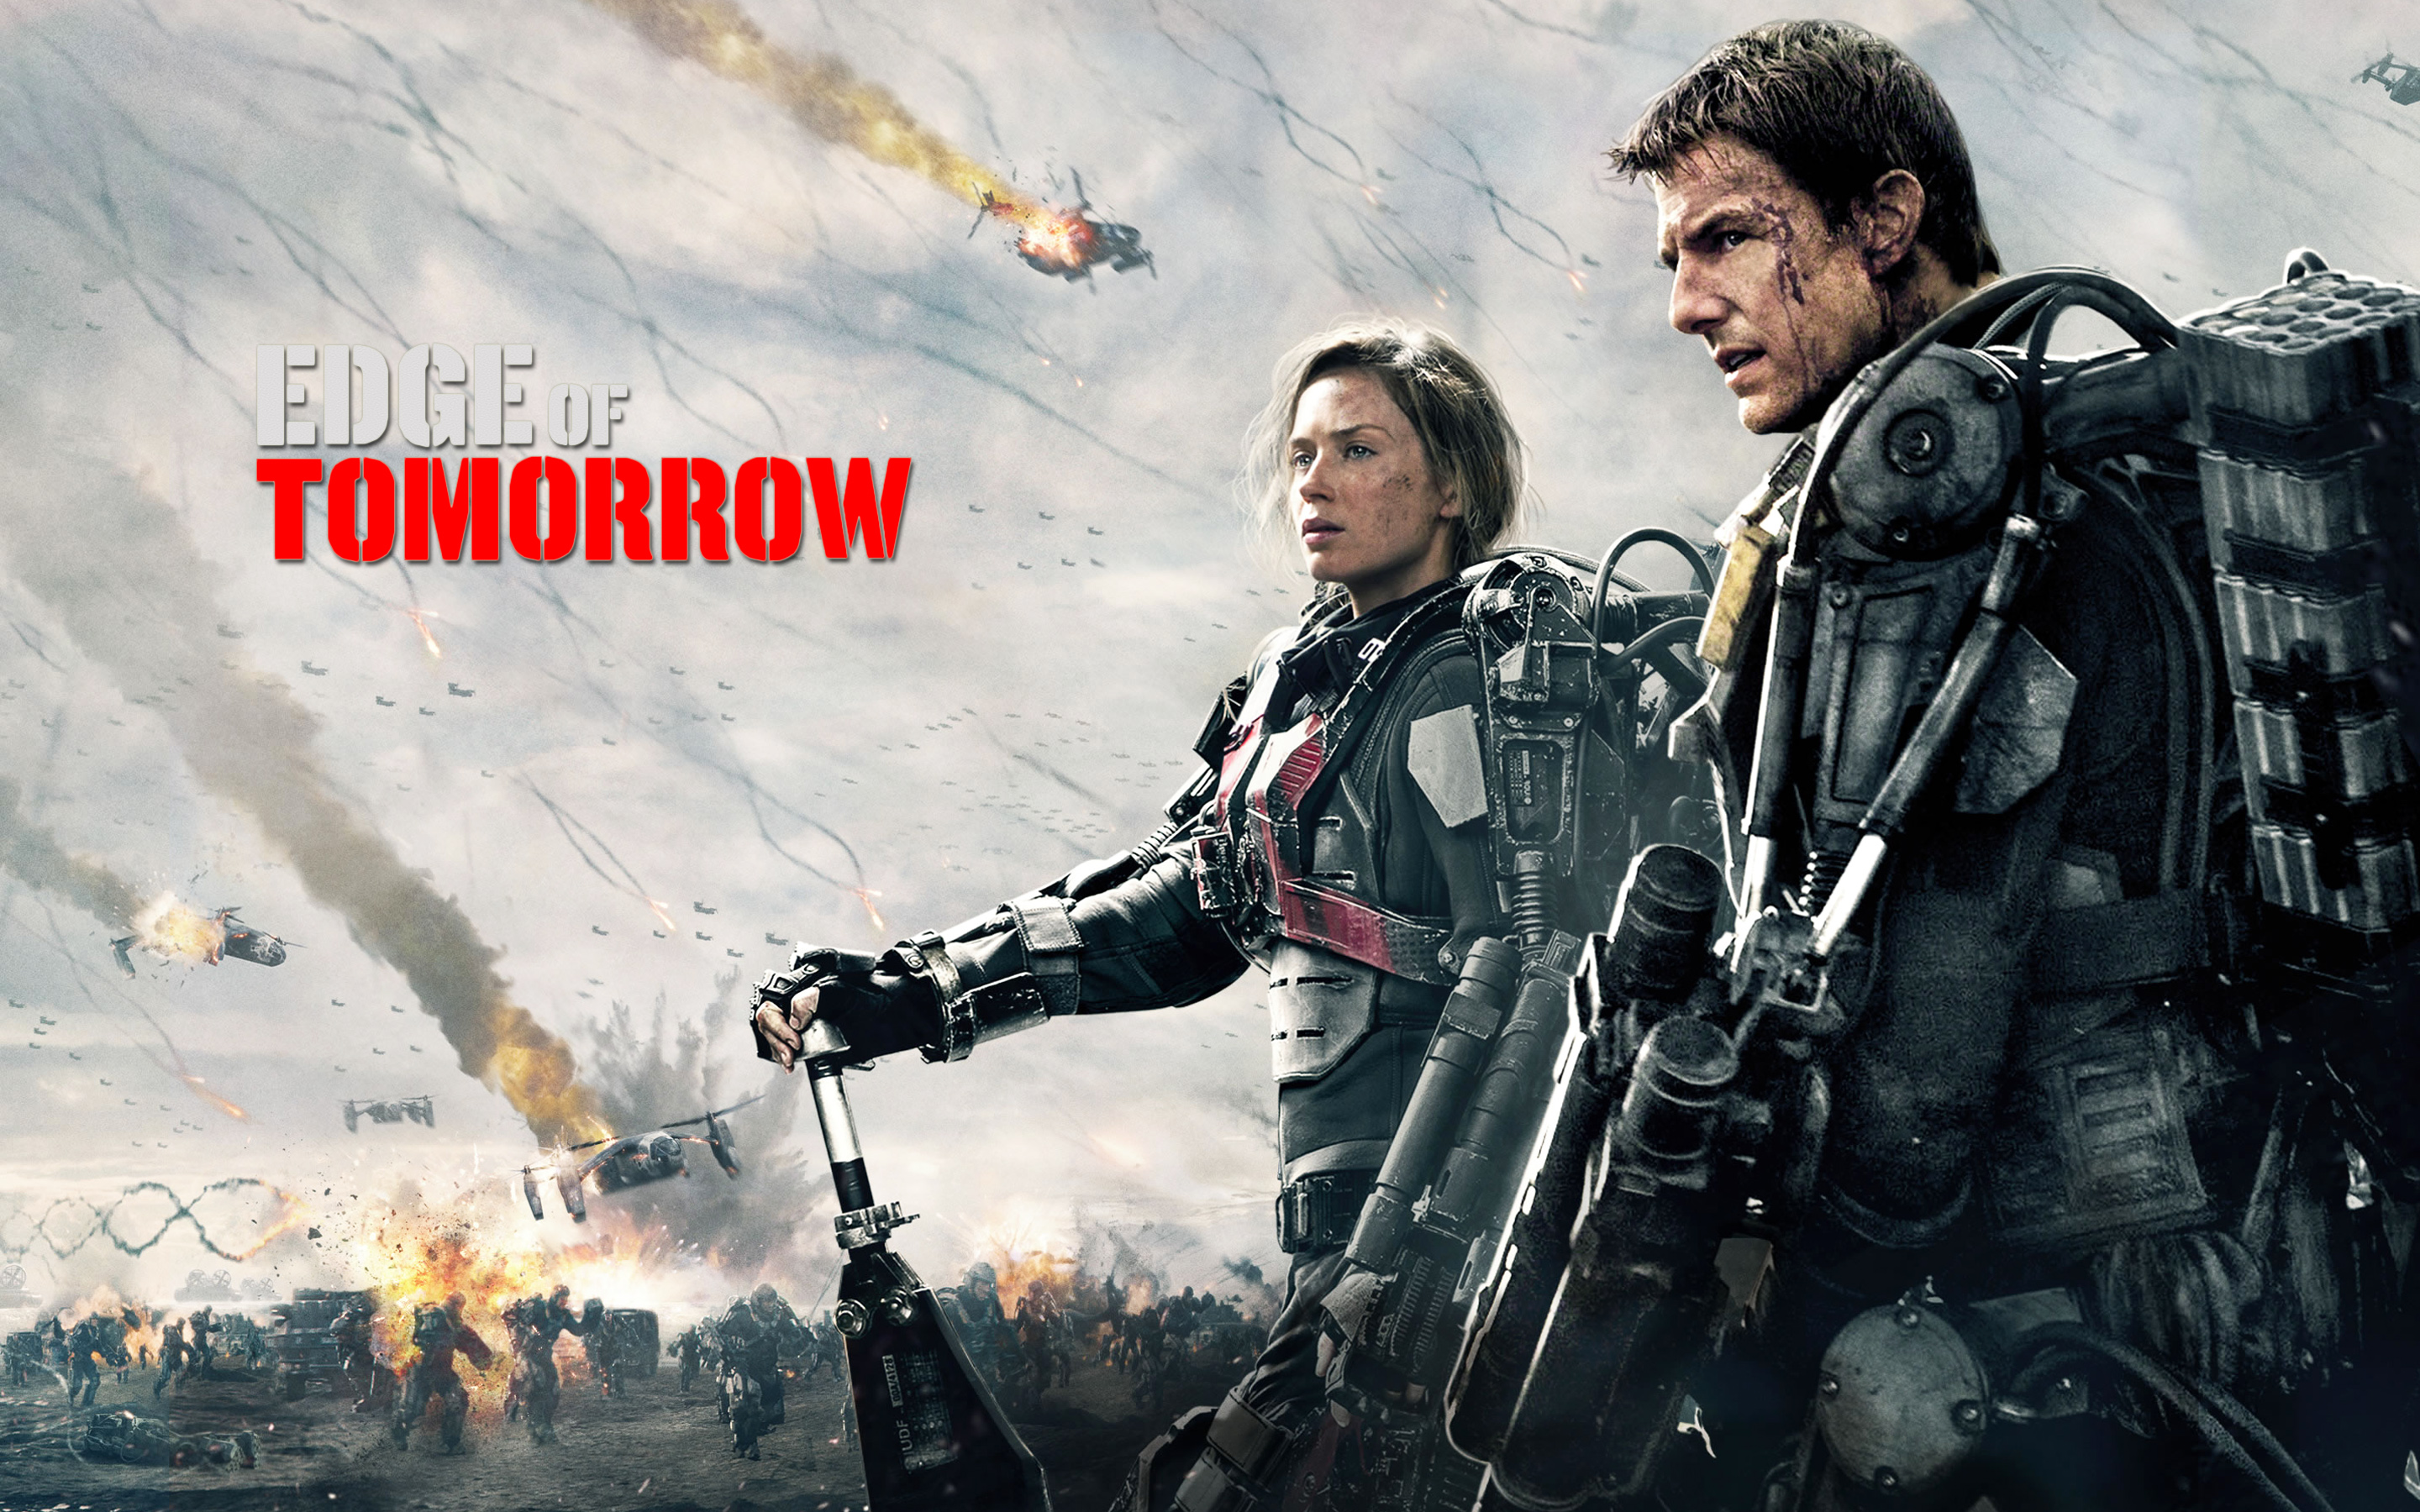 Watch Movie Edge of Tomorrow Online Streaming